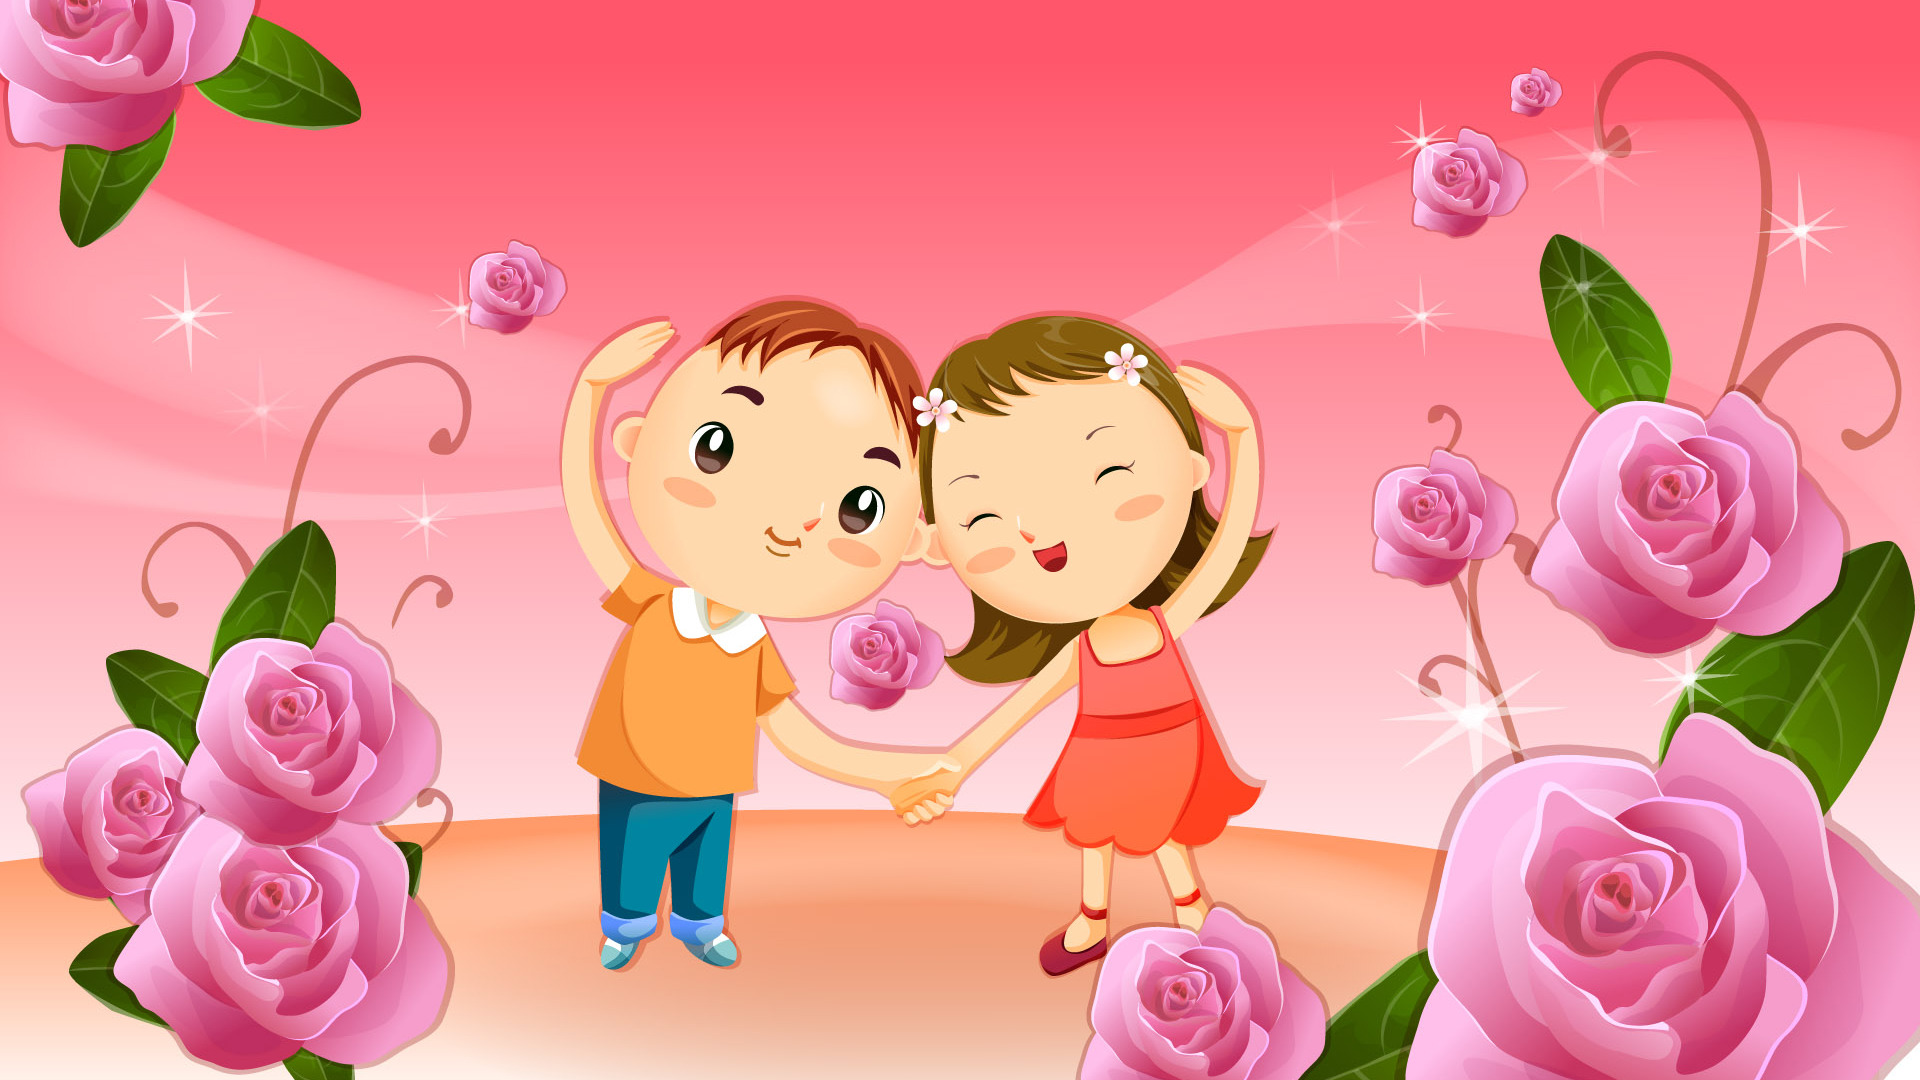 Download Cute cartoon couple wallpaper